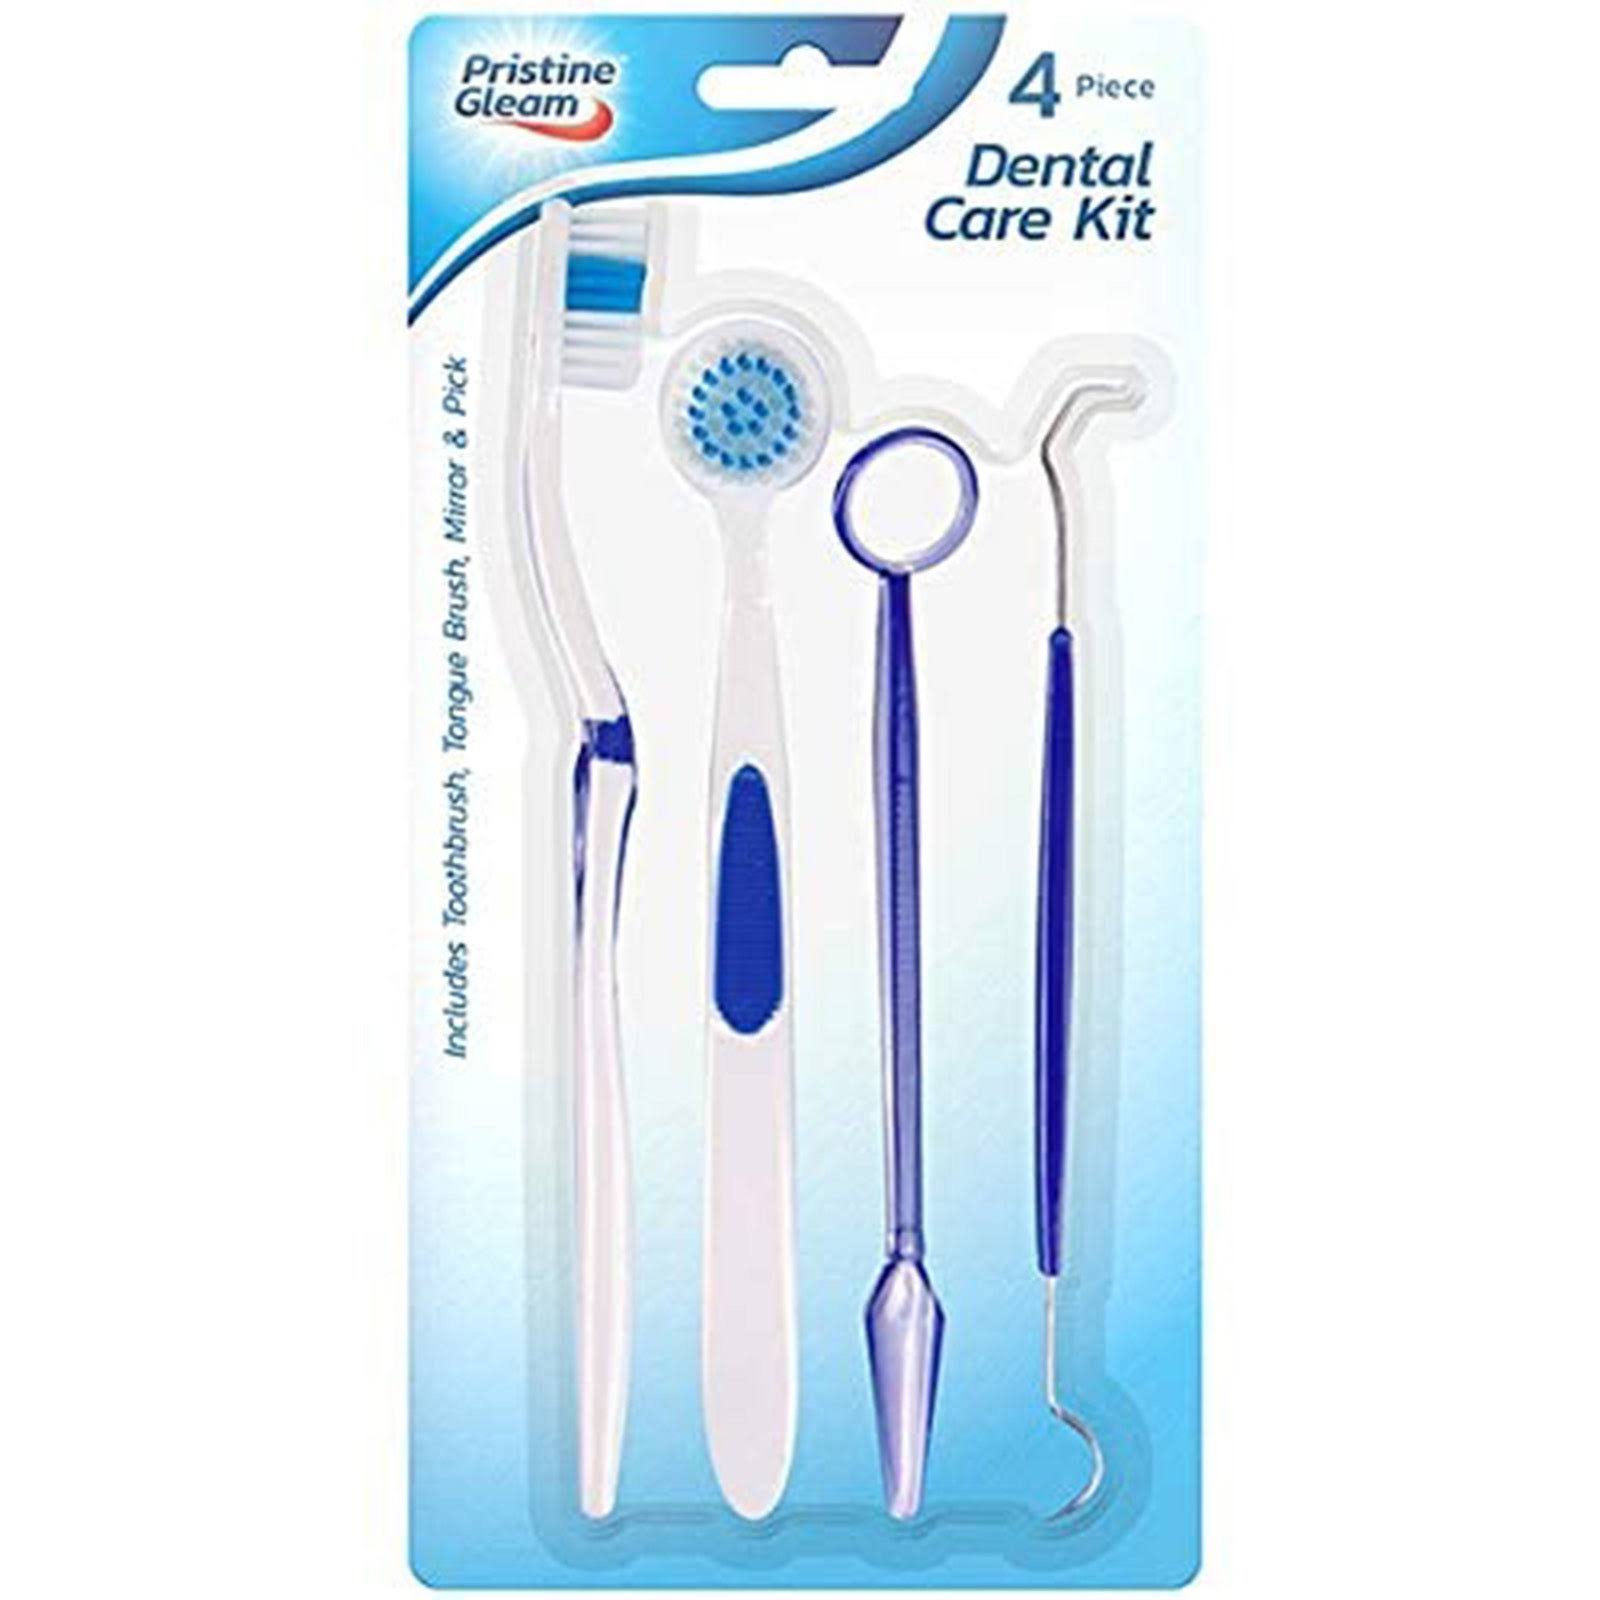 Pristine Gleam Dental Care Kit 4pc